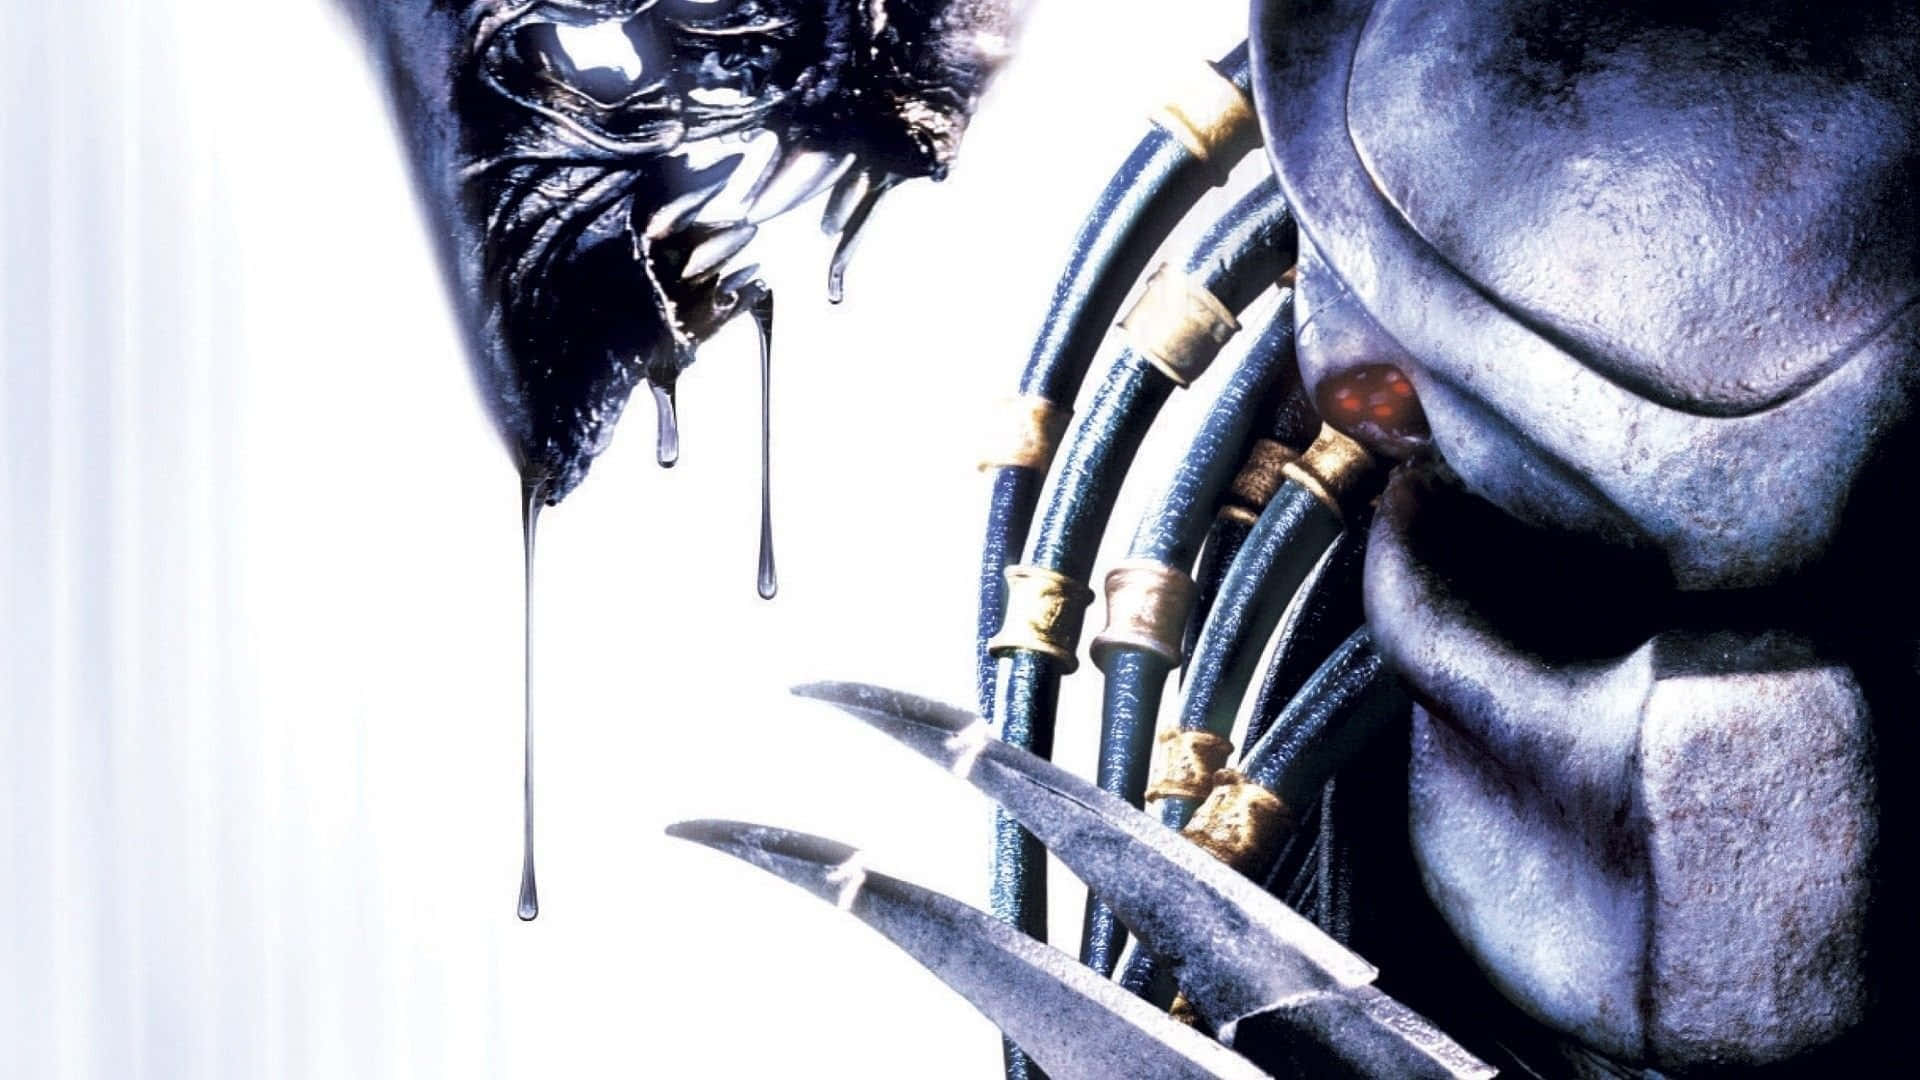 Download Alien Vs Predator Attacking Humans Wallpaper